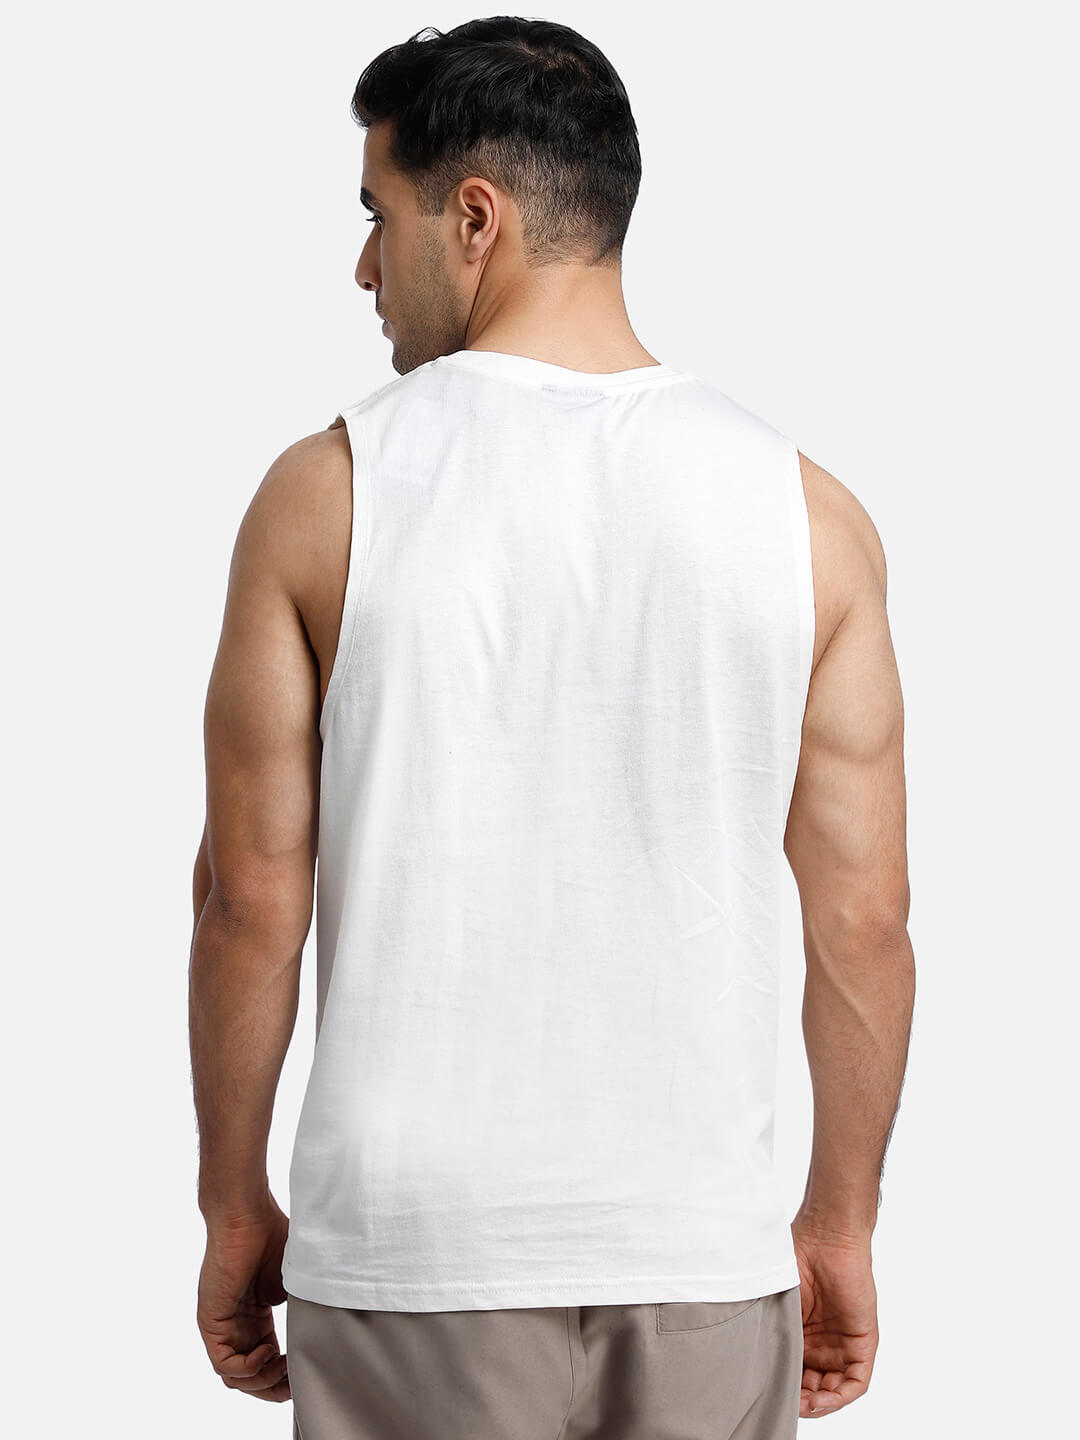 Torro Tank White T-Shirts for Men